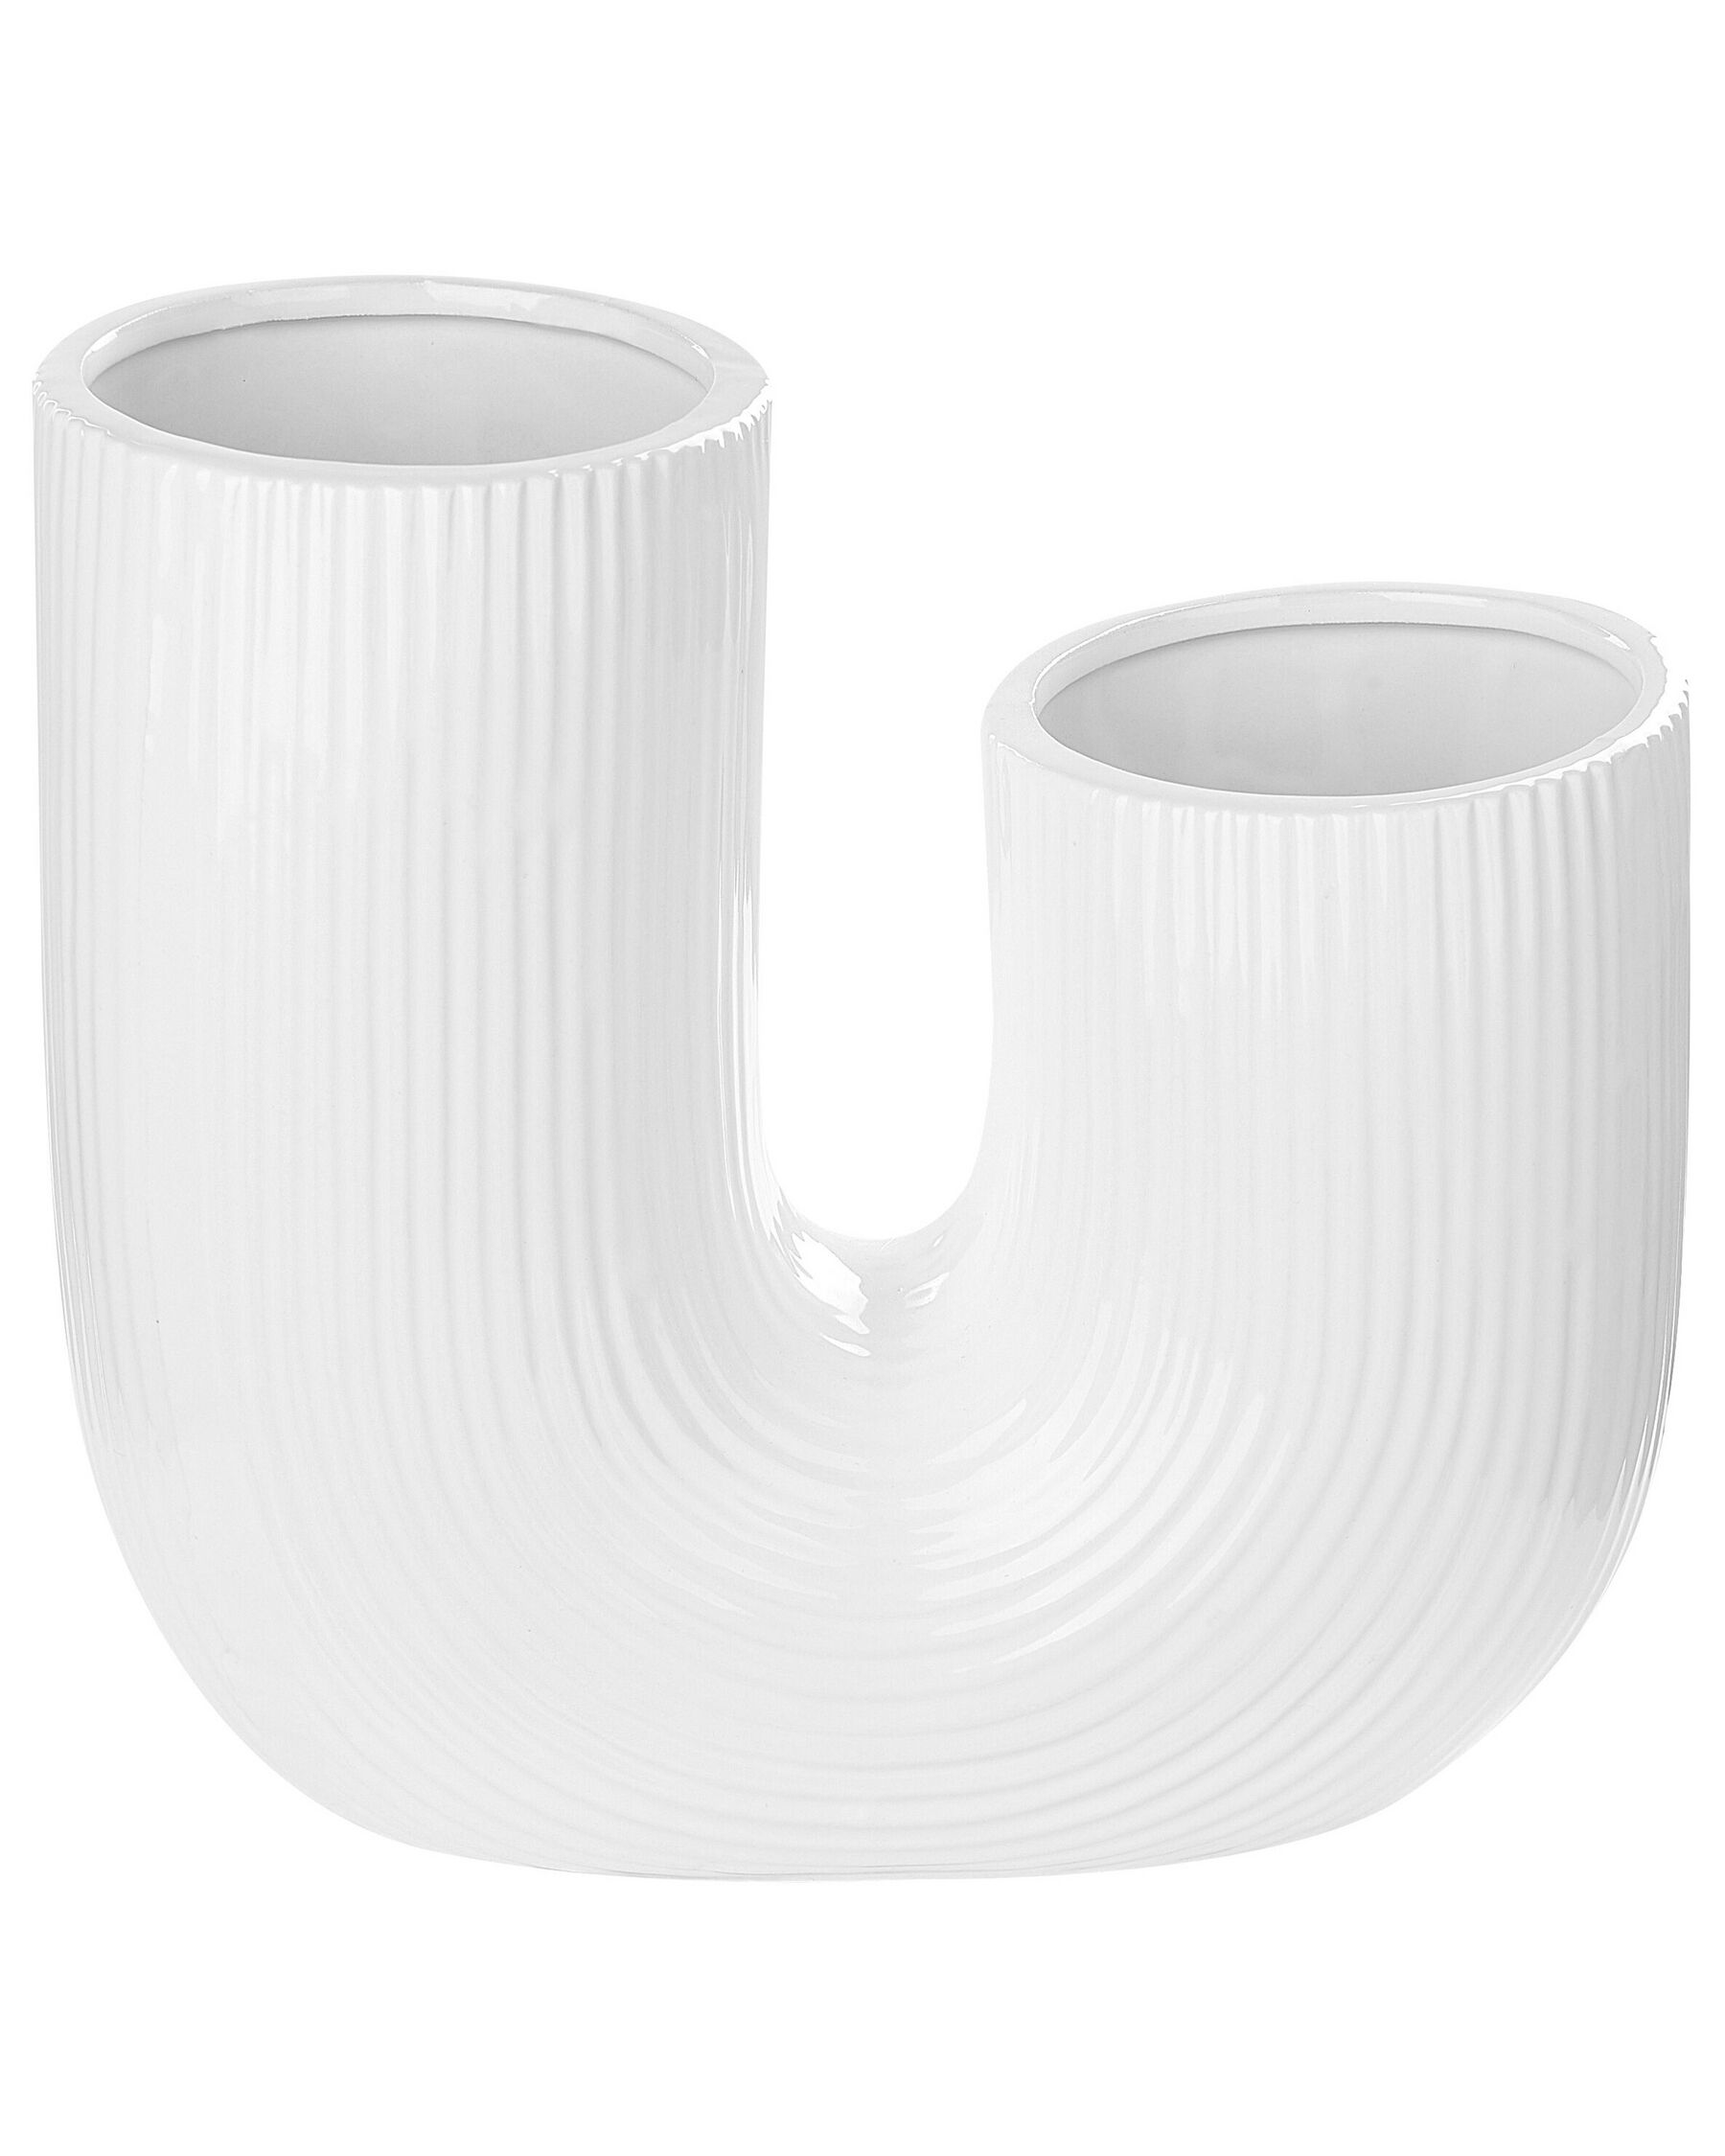 Vaso gres porcellanato bianco 23 cm MITILINI_844669